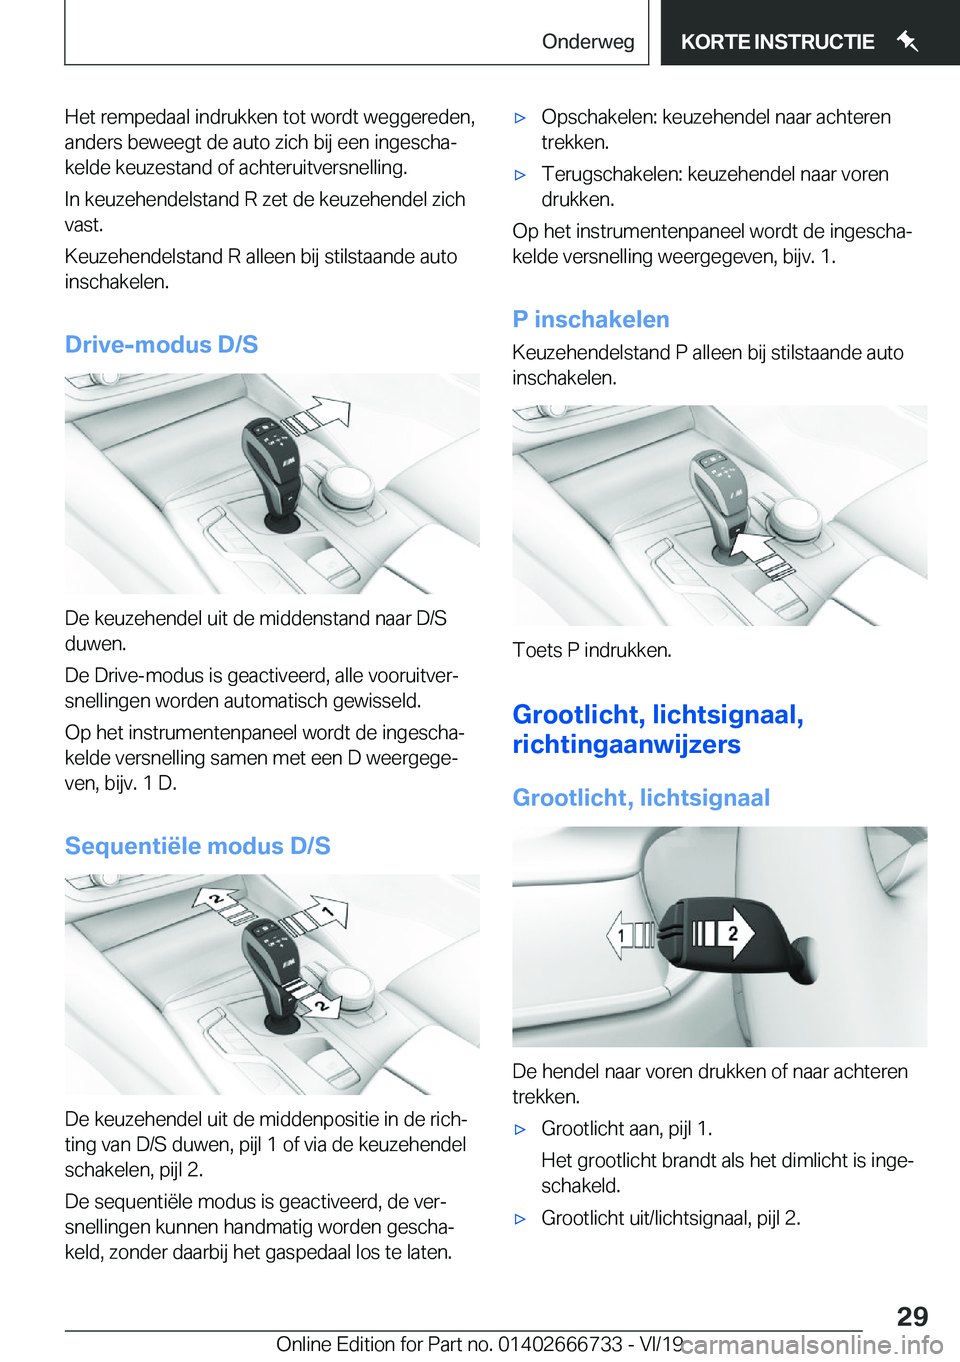 BMW M5 2020  Instructieboekjes (in Dutch) �H�e�t��r�e�m�p�e�d�a�a�l��i�n�d�r�u�k�k�e�n��t�o�t��w�o�r�d�t��w�e�g�g�e�r�e�d�e�n�,
�a�n�d�e�r�s��b�e�w�e�e�g�t��d�e��a�u�t�o��z�i�c�h��b�i�j��e�e�n��i�n�g�e�s�c�h�aj
�k�e�l�d�e��k�e�u